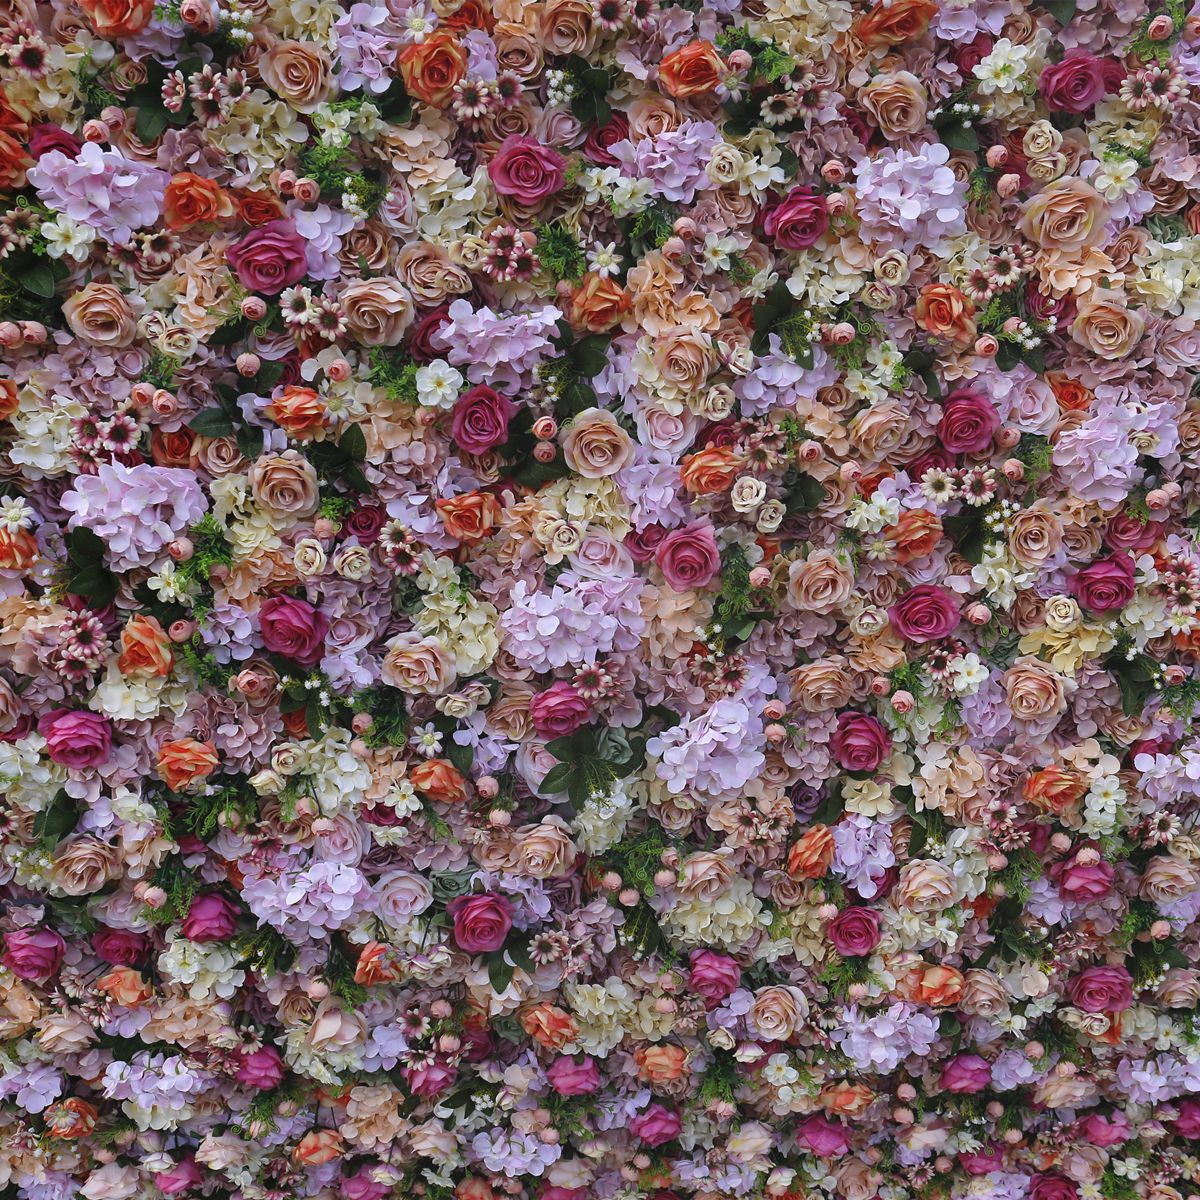  Simulated floral wall wedding decoration ຕົບແຕ່ງນອກກິດຈະກໍາ 